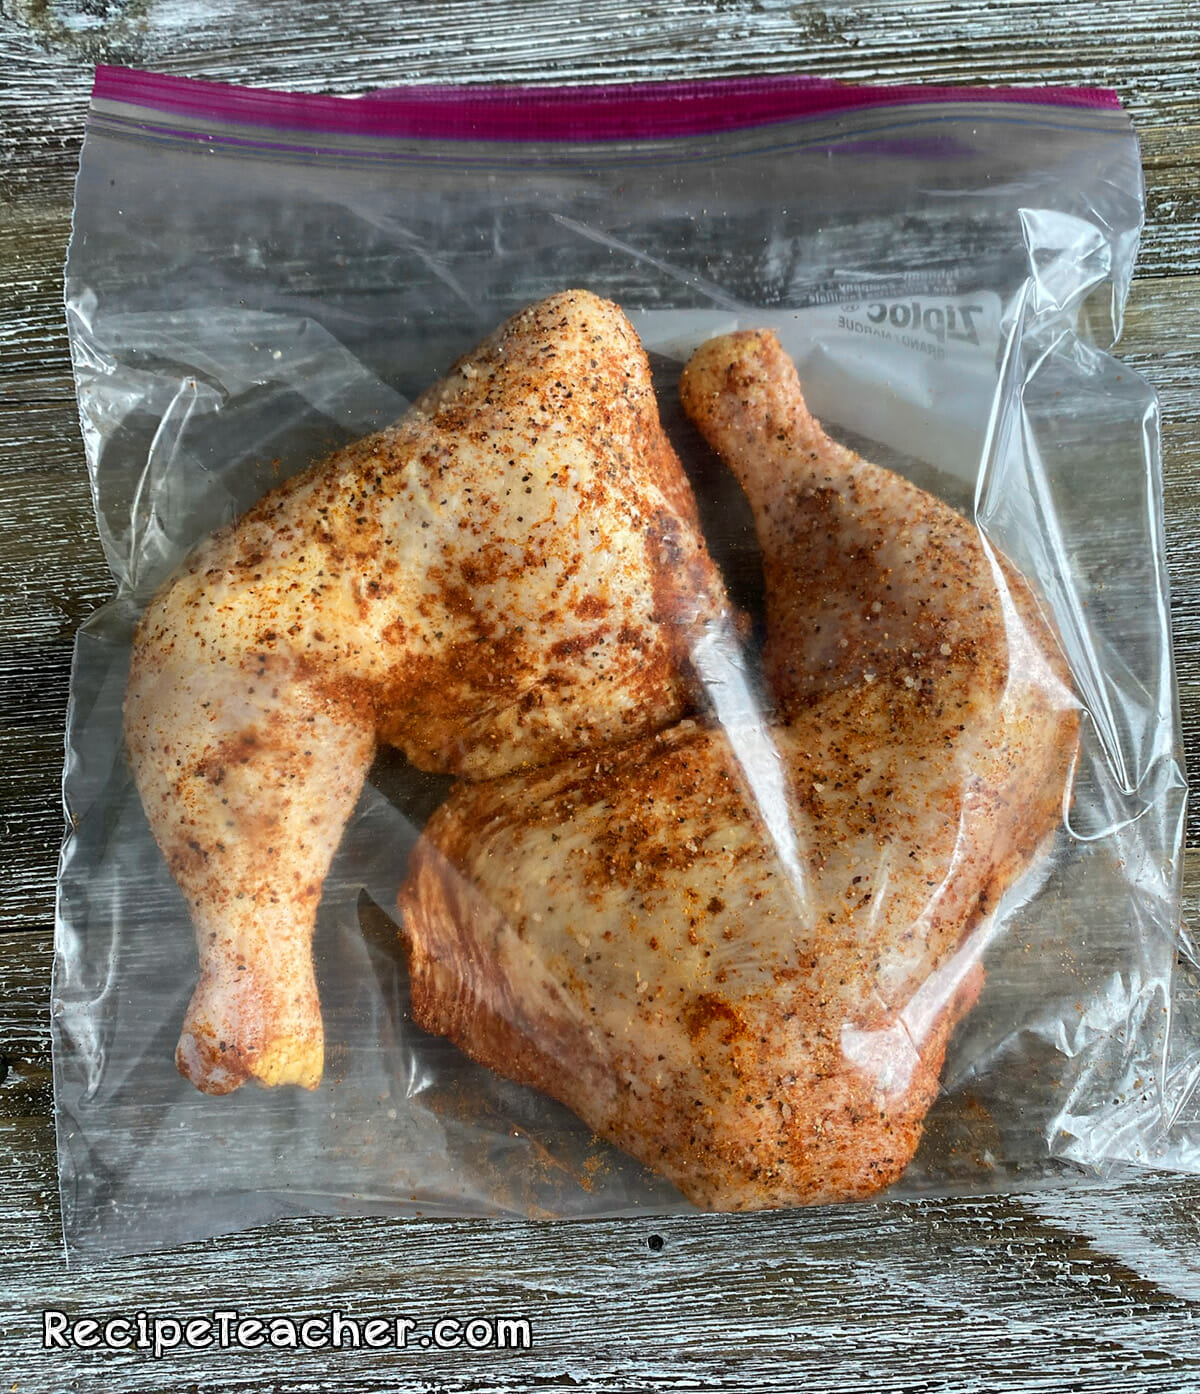 Recipe for air fryer chicken leg quarters